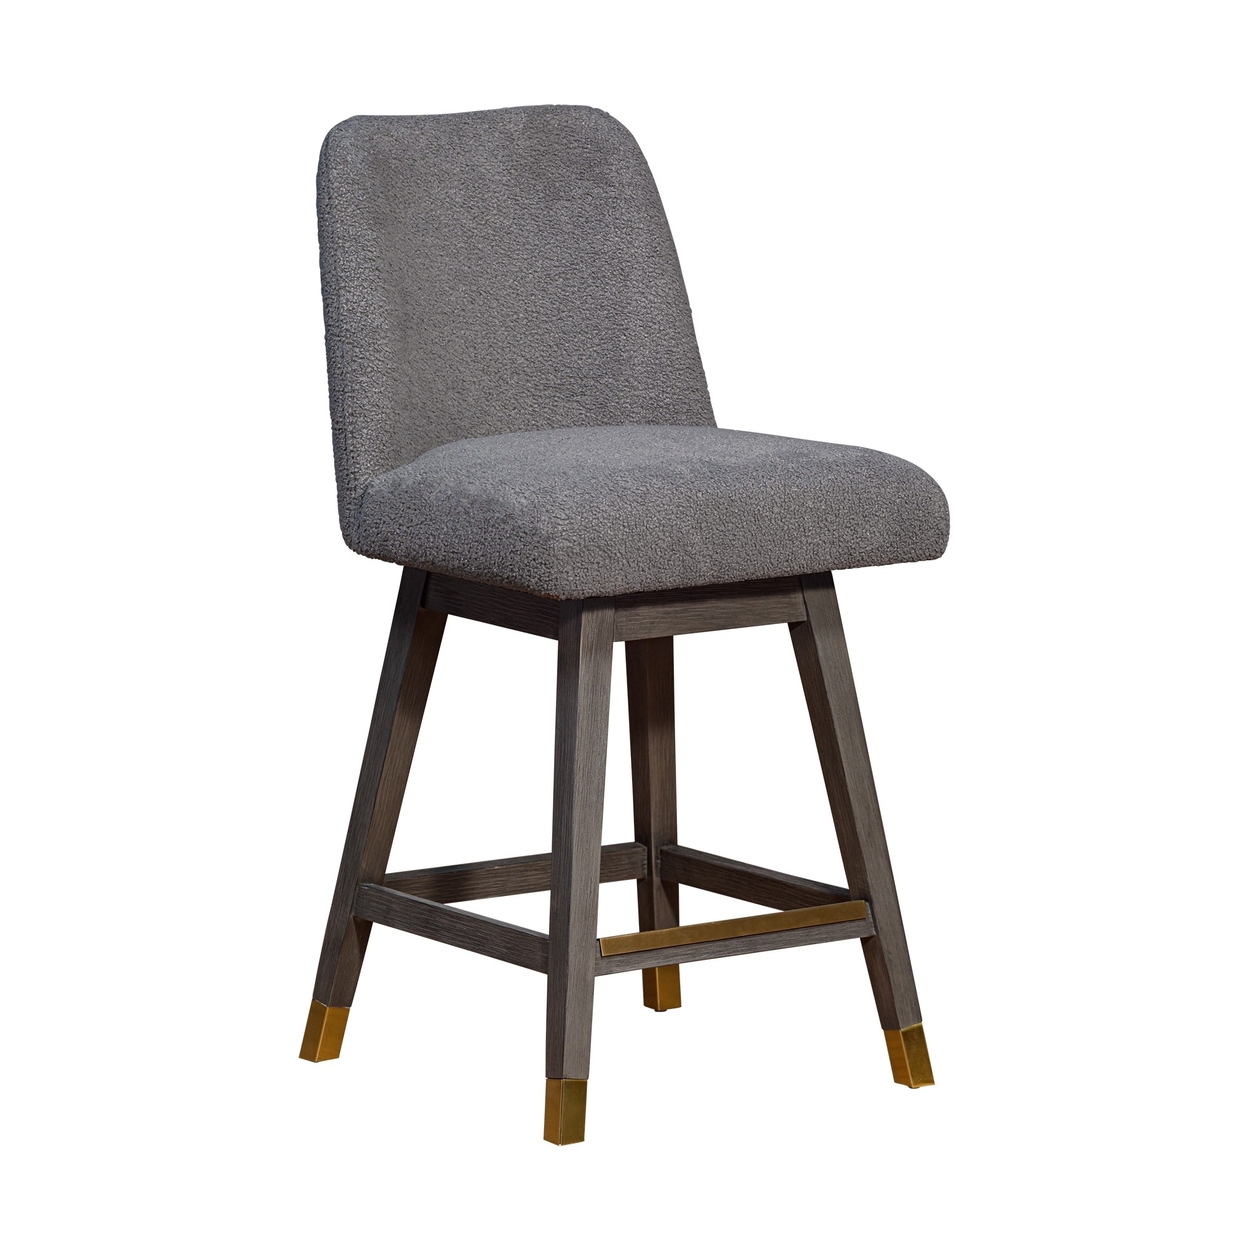 Lara 26 Inch Swivel Counter Stool Chair, Gray Boucle Fabric, Wood Legs- Saltoro Sherpi